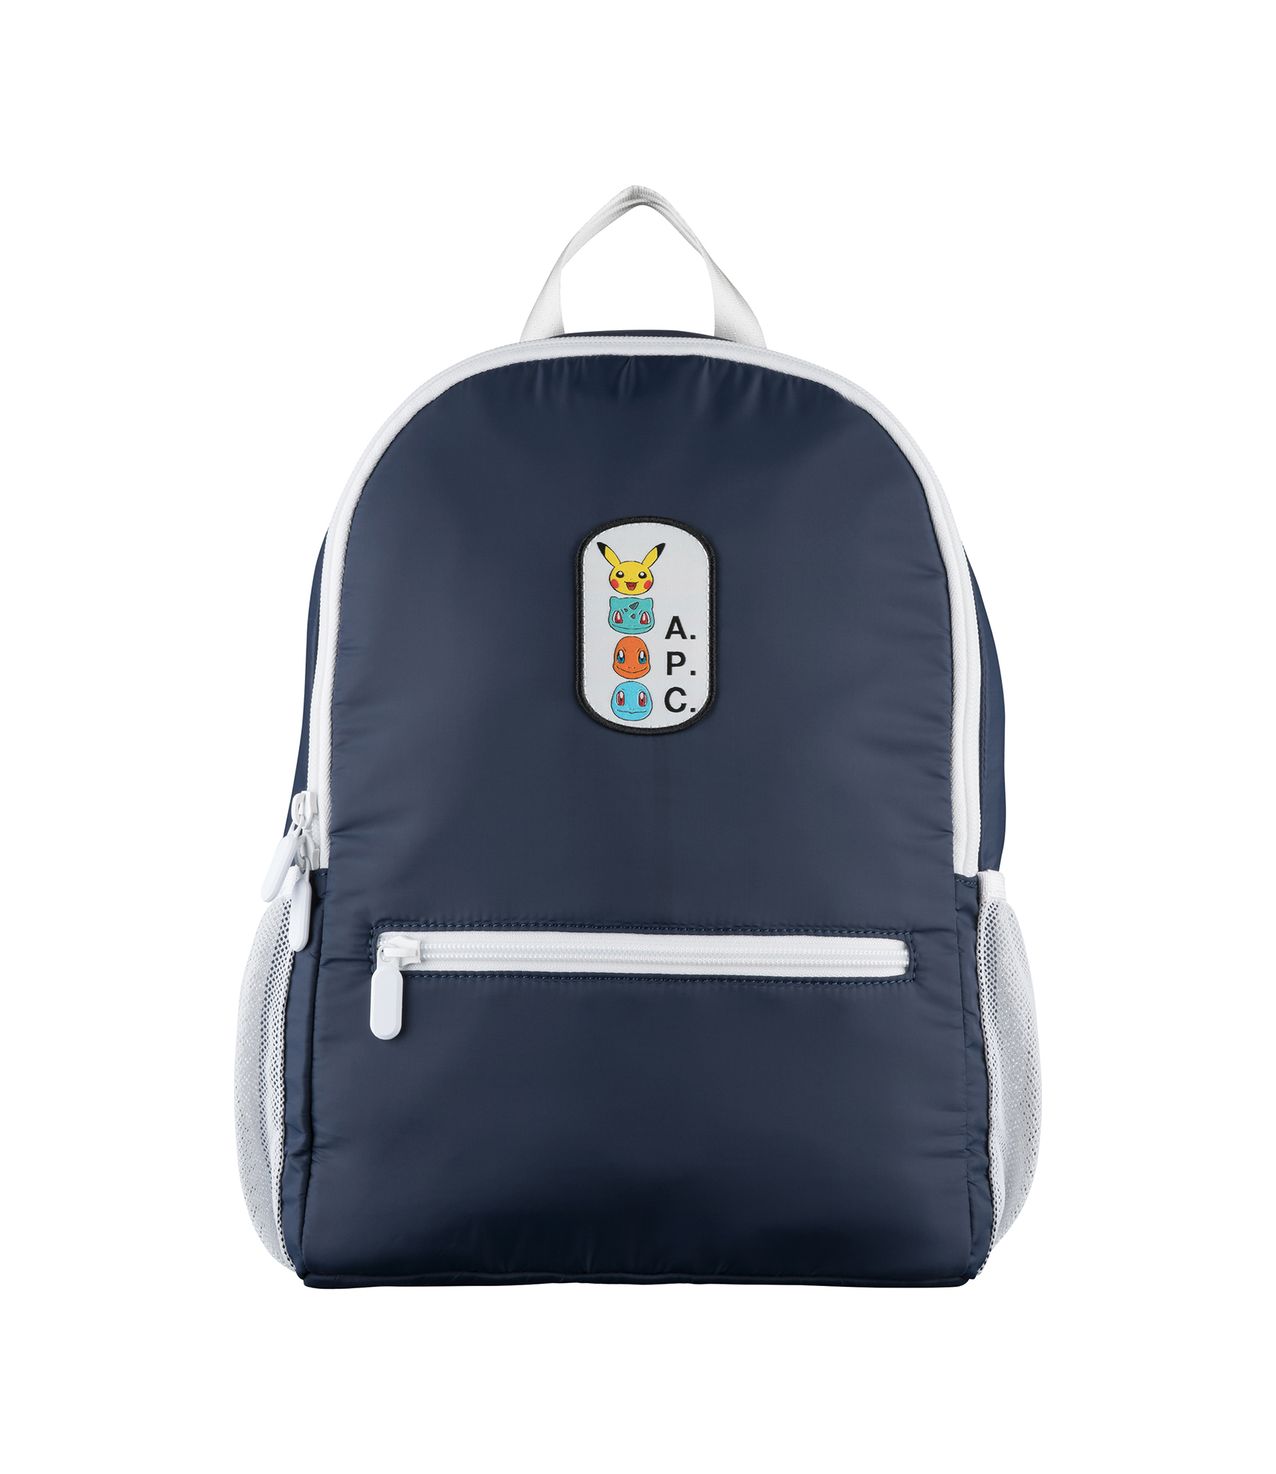 Pokémon backpack DARK NAVY BLUE APC